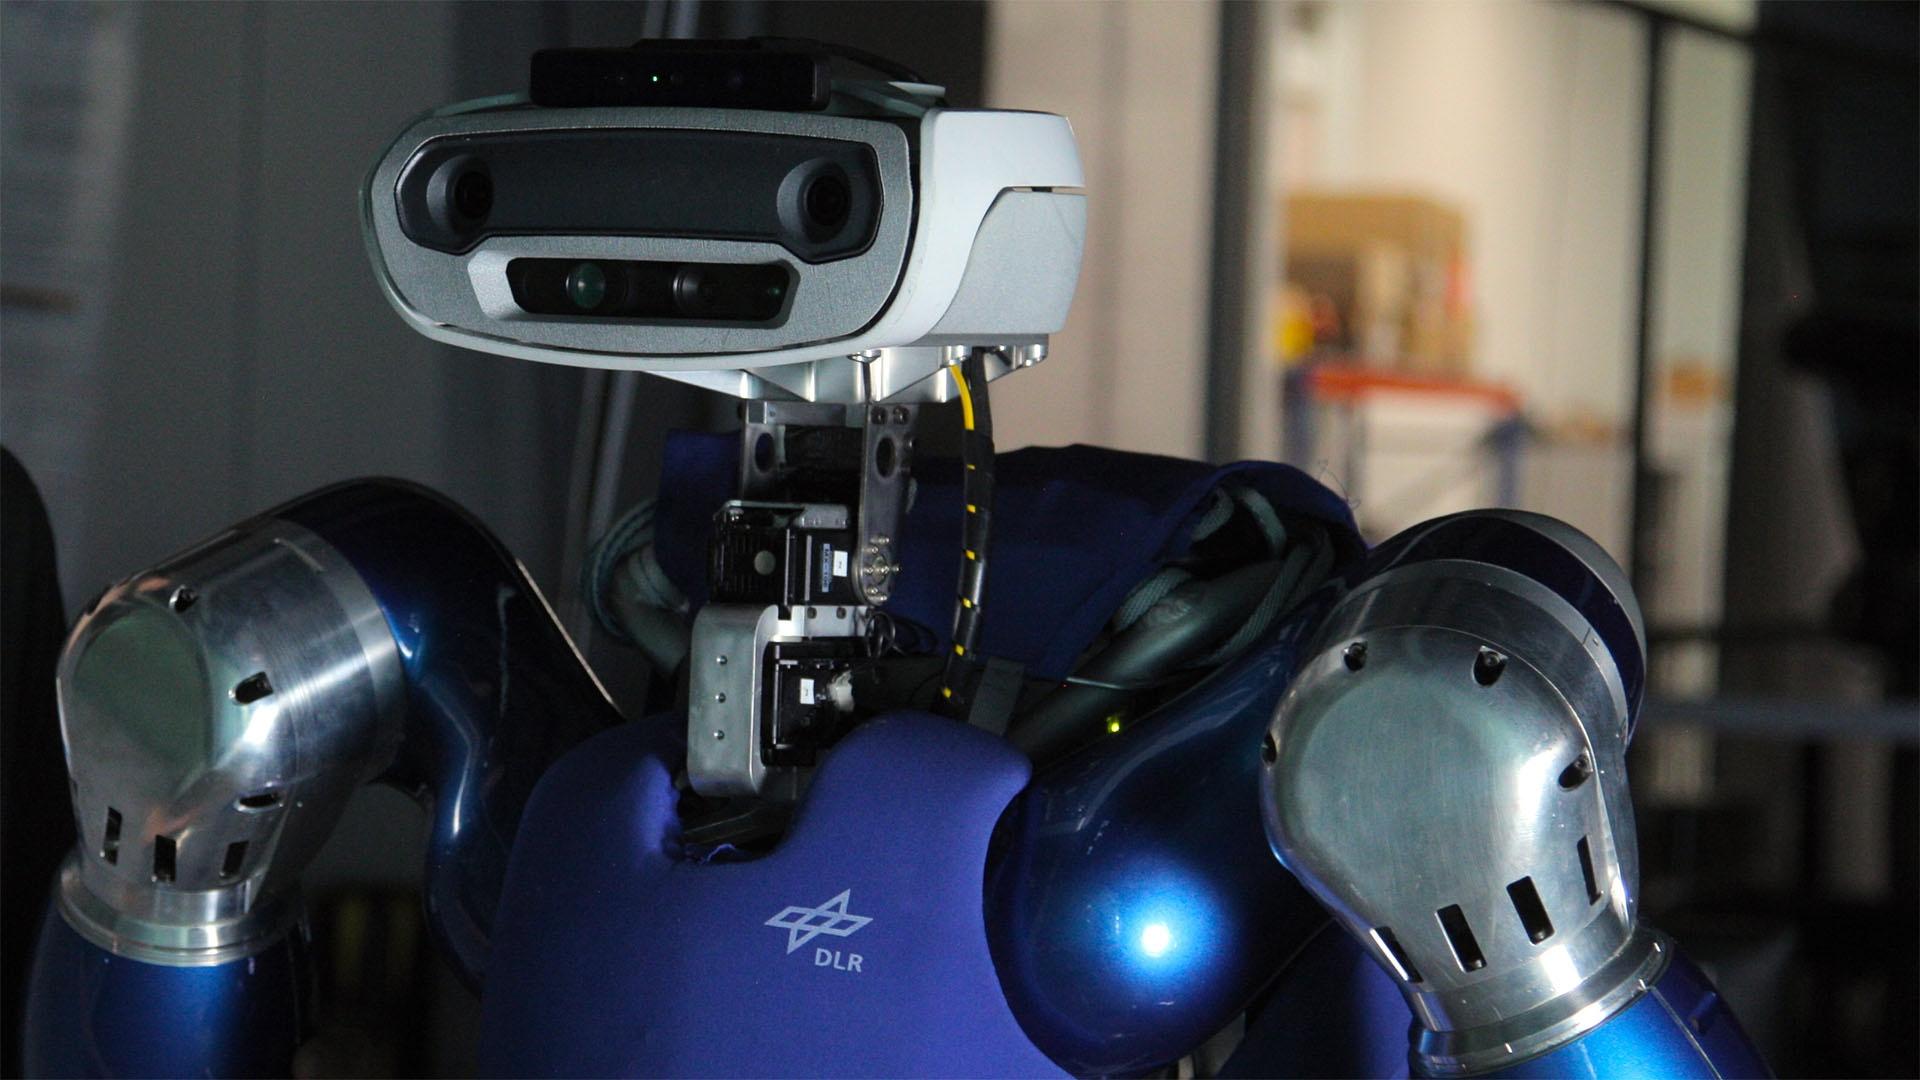 DIY Robot Hand - Buffalo Museum of Science